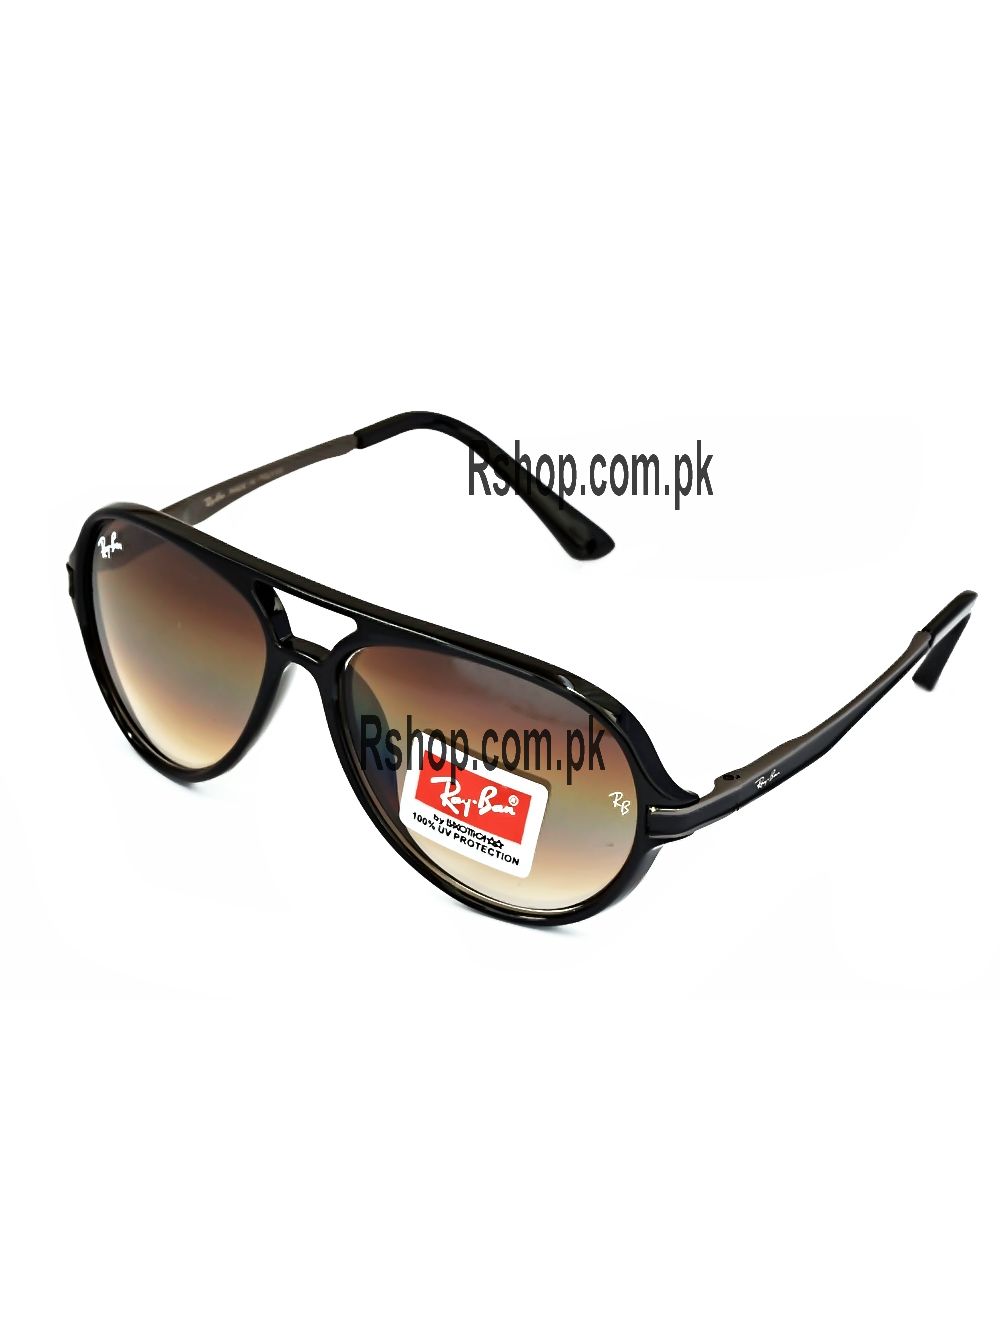 Ray Ban Luxury Sunglasses in Pakistan,Ray Ban sunglasses, High quality  replica Ray Ban Sunglasses